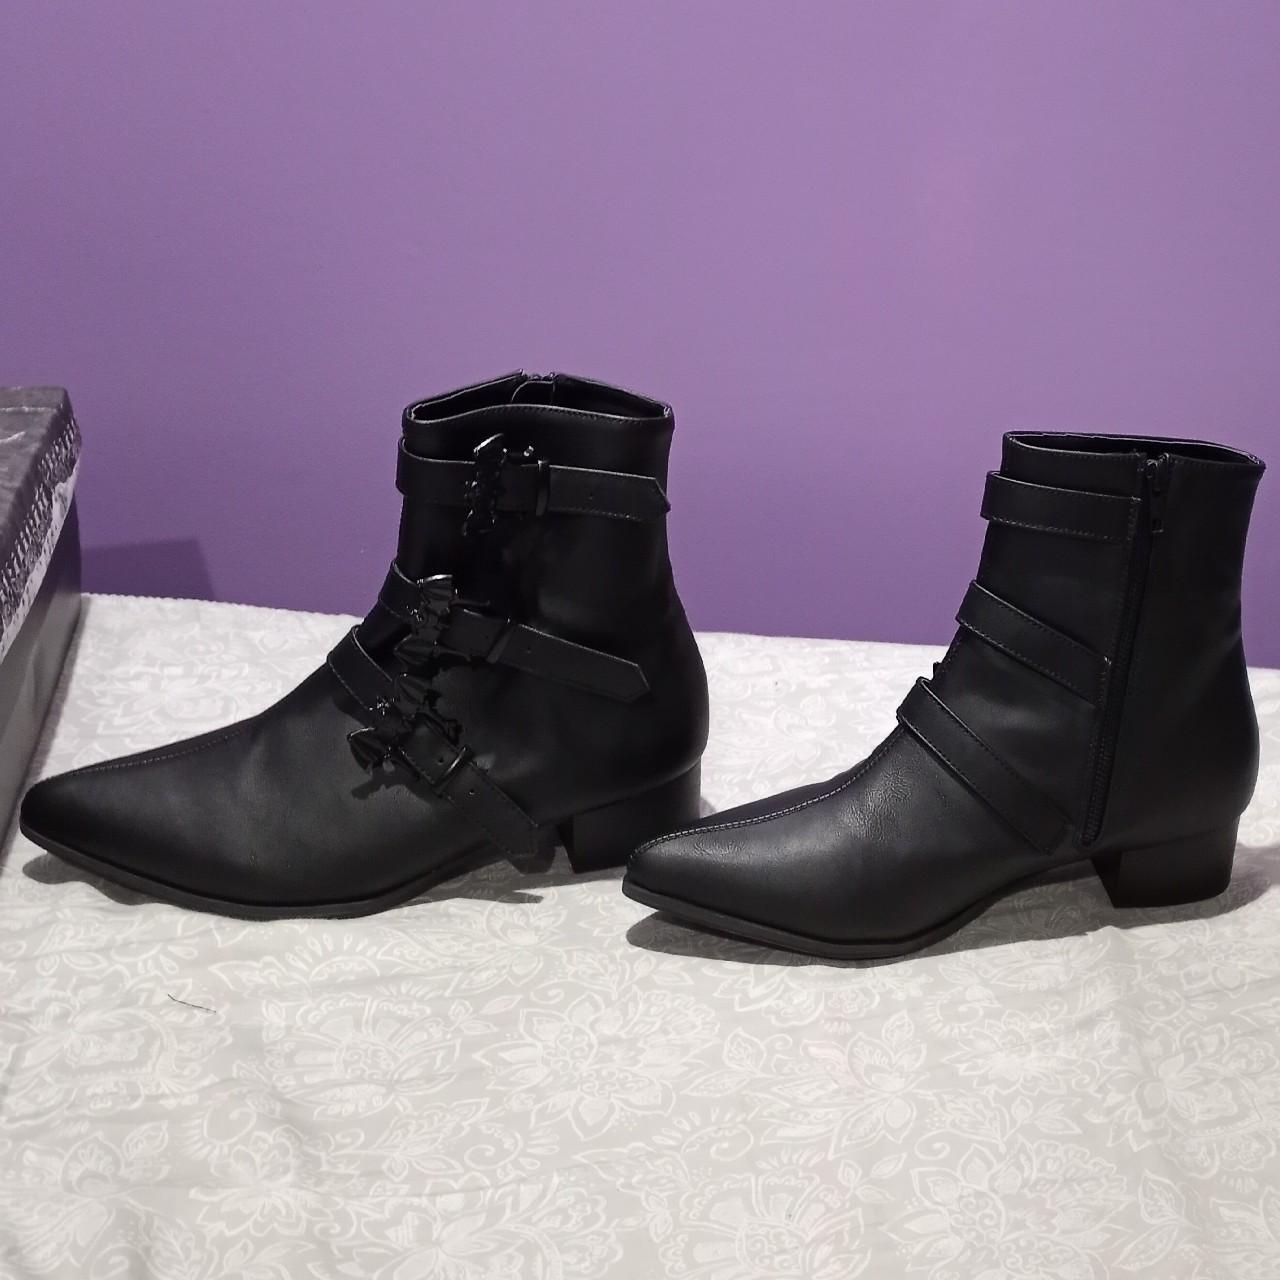 Demonia Men's Black Boots